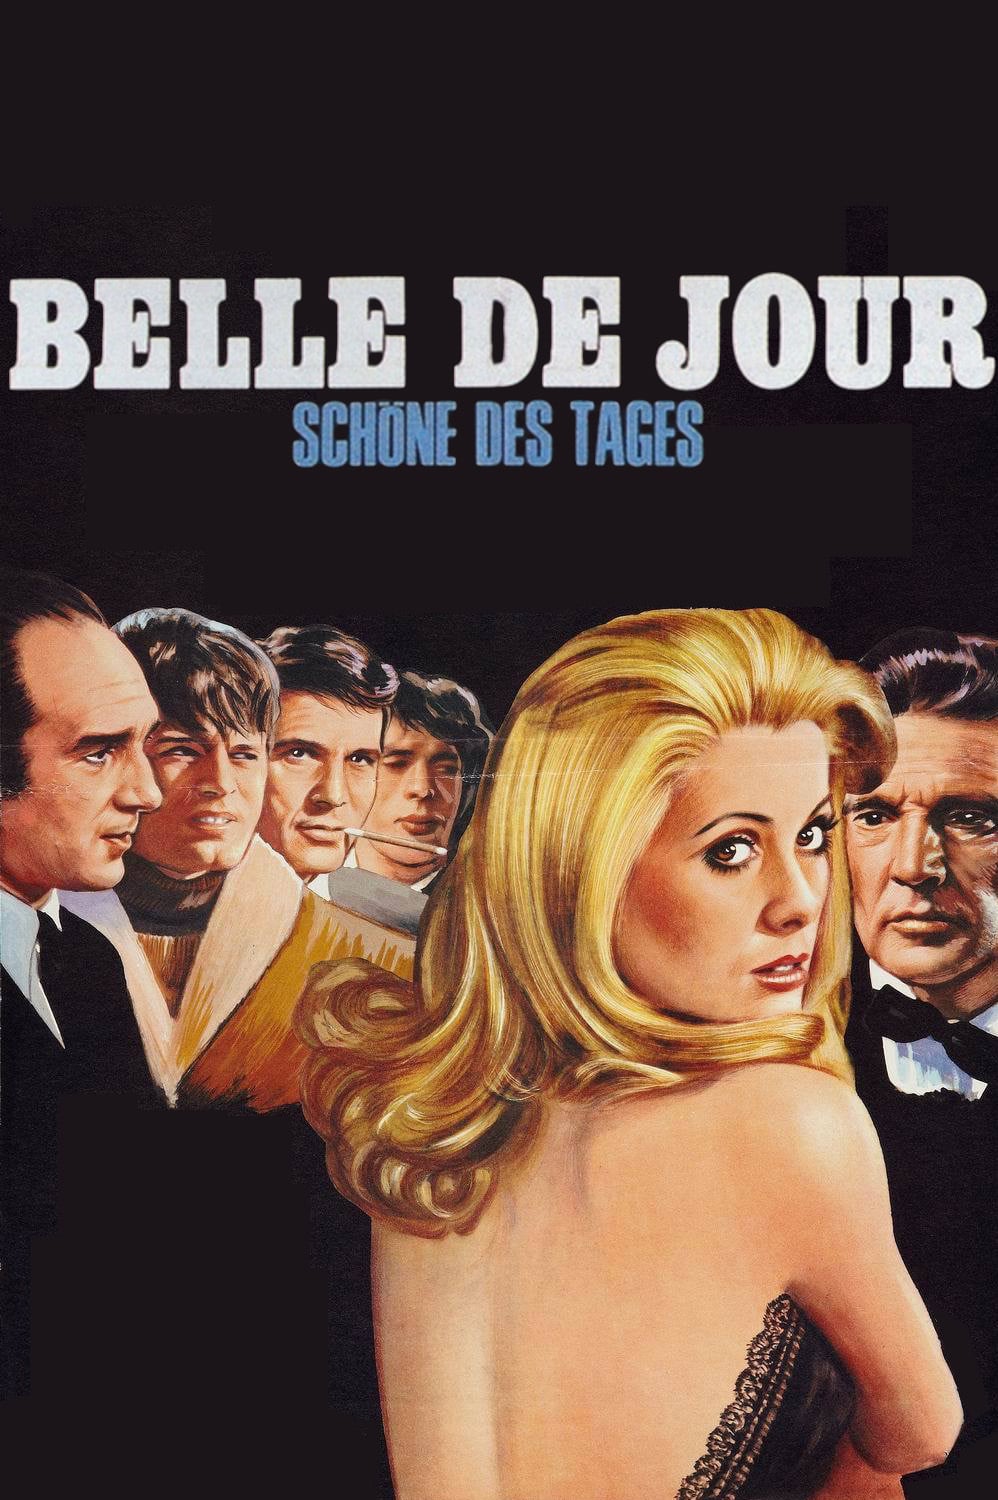 Plakat von "Belle de jour - Schöne des Tages"